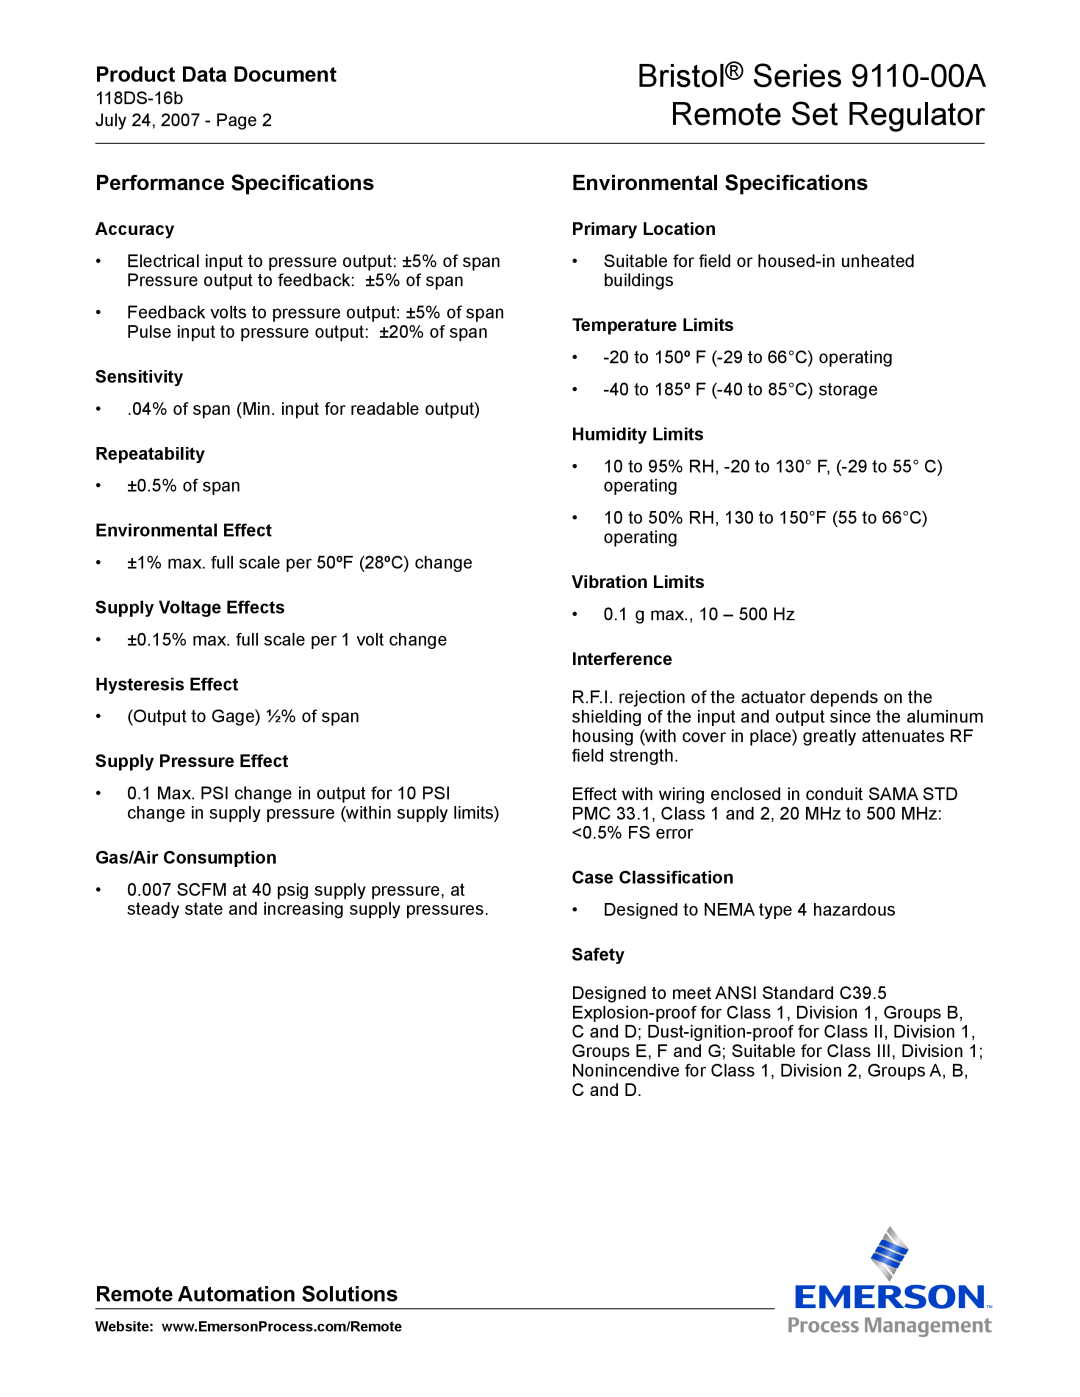 Emerson Process Management manual Bristol Series 9110-00A Remote Set Regulator, Performance Specifications 